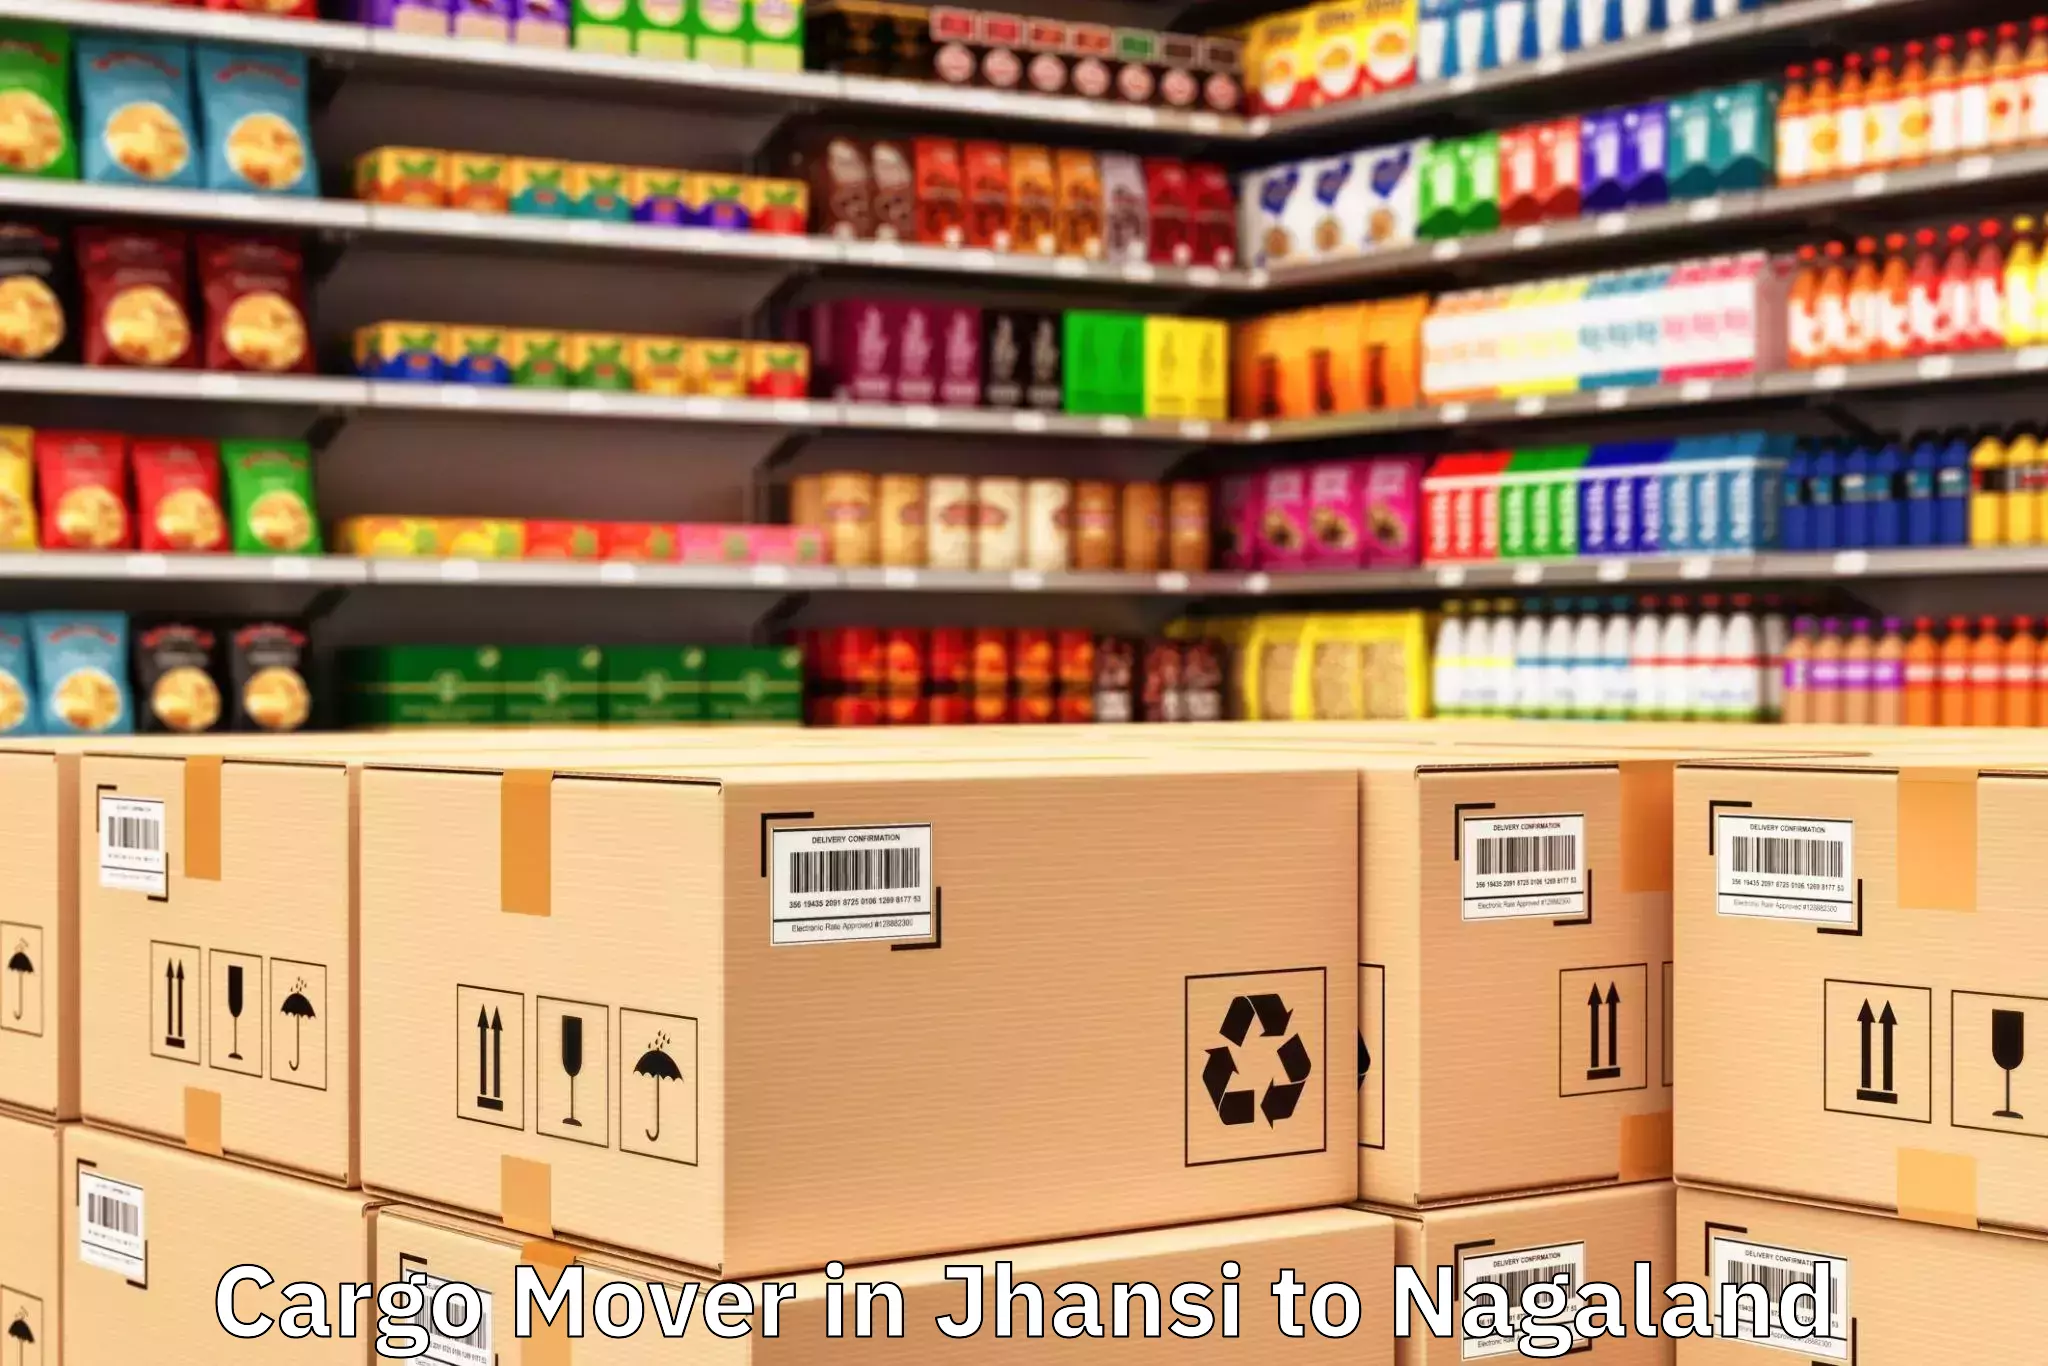 Jhansi to Nagaland Cargo Mover Booking